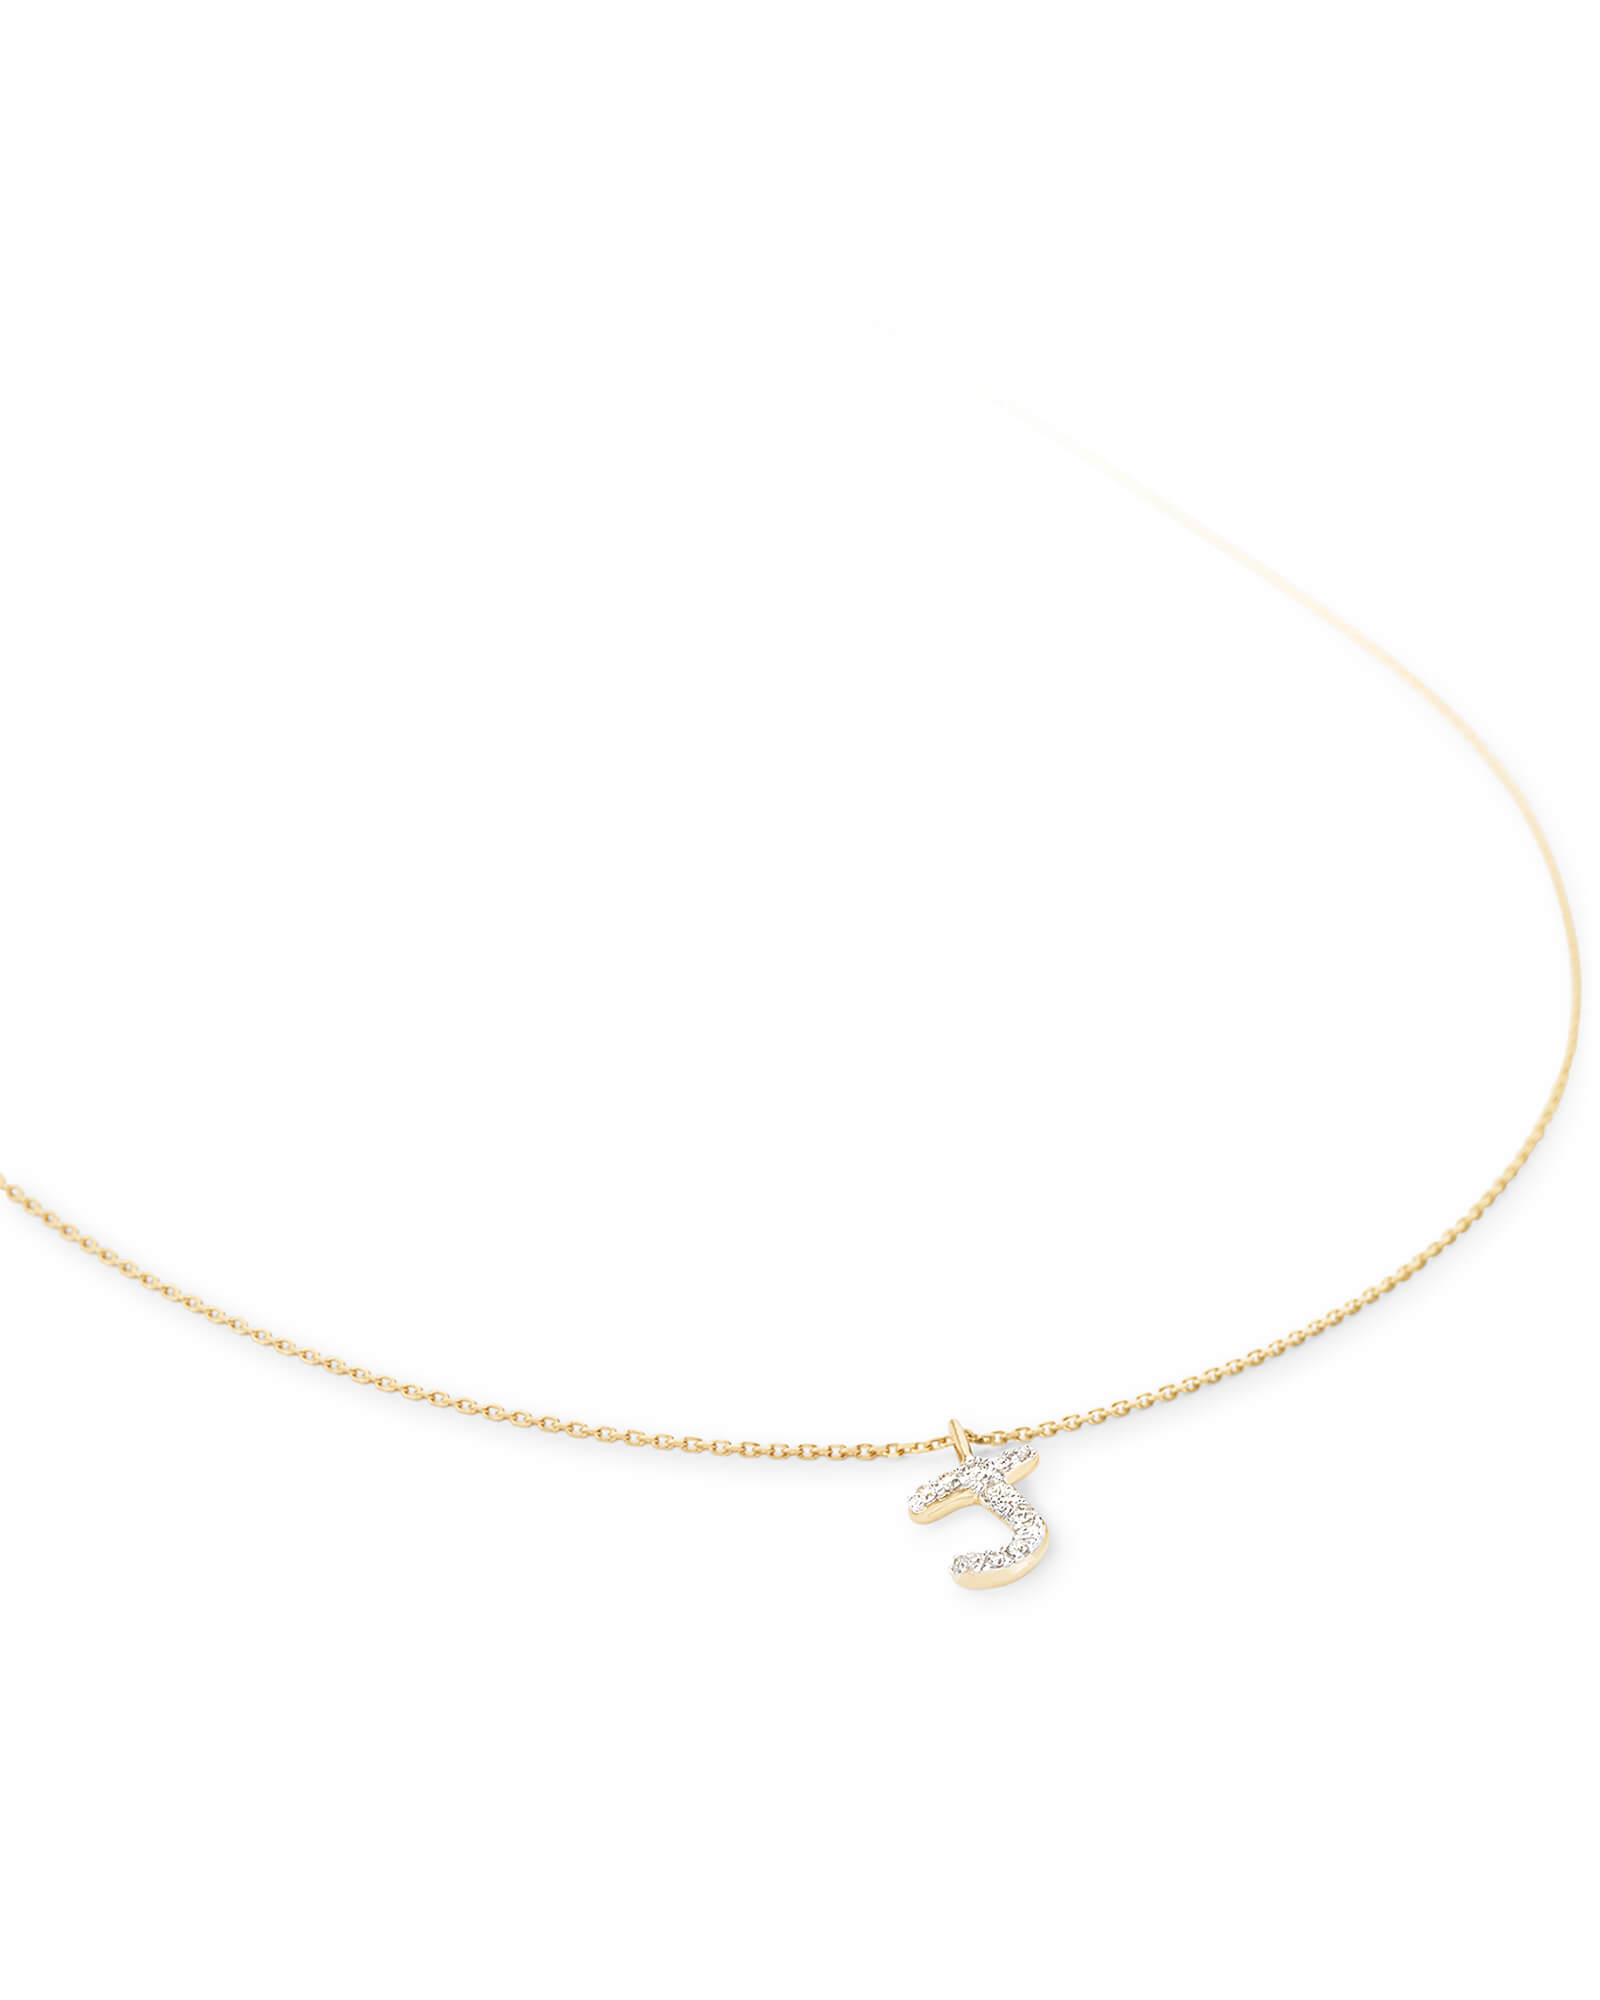 Kendra Scott Diamond Letter J Pendant Necklace in 14k Yellow Gold | Diamonds